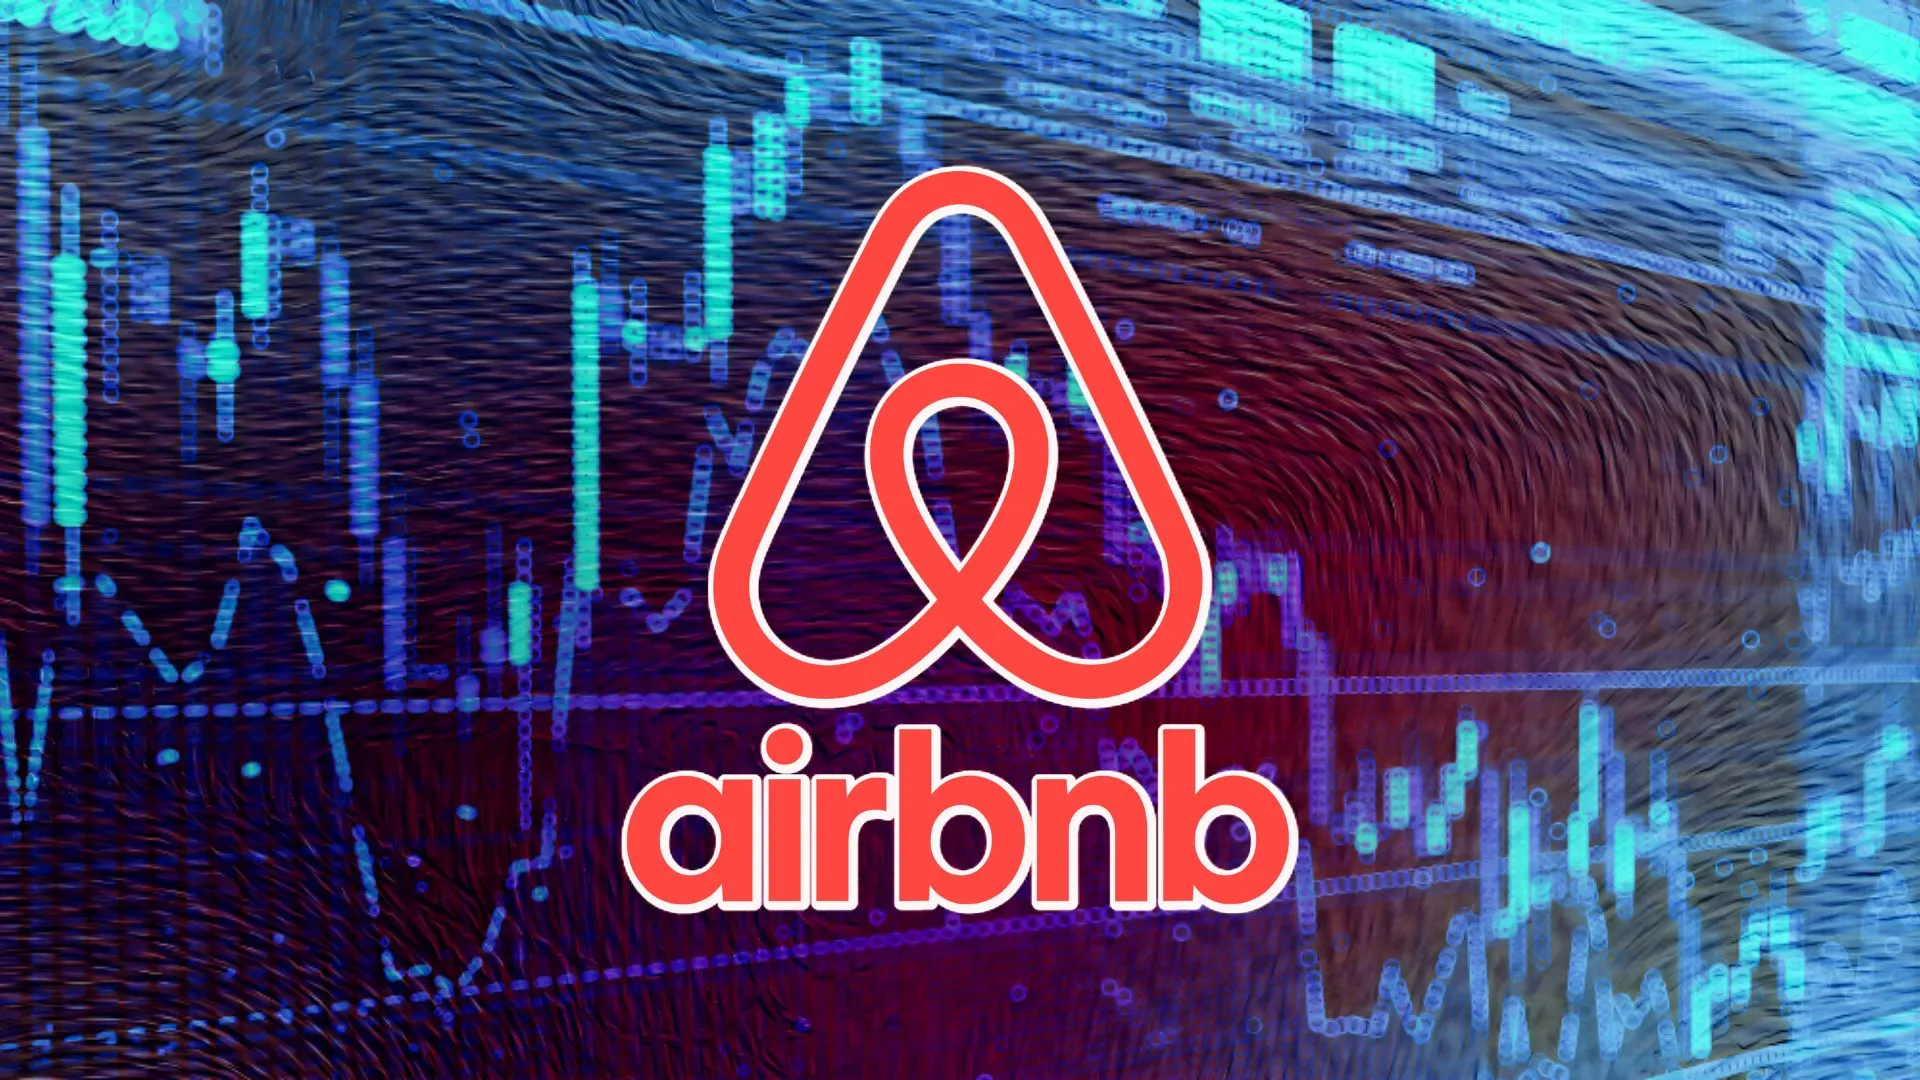 Airbnb Inc. Stock Price Analysis: ABNB Stock Surged 68.51% YTD.